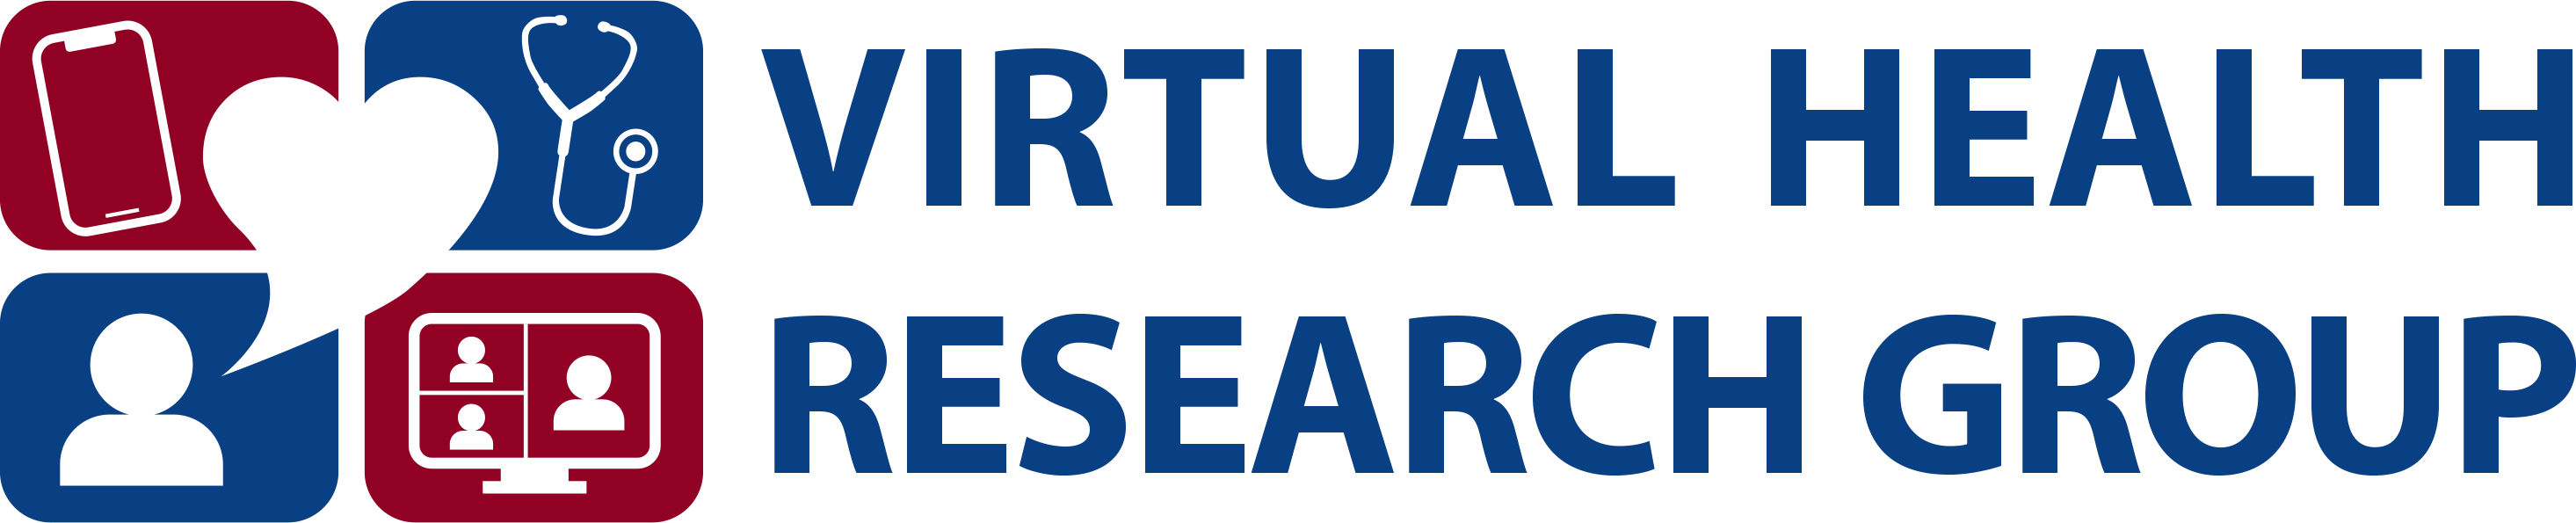 virtual health research group logo